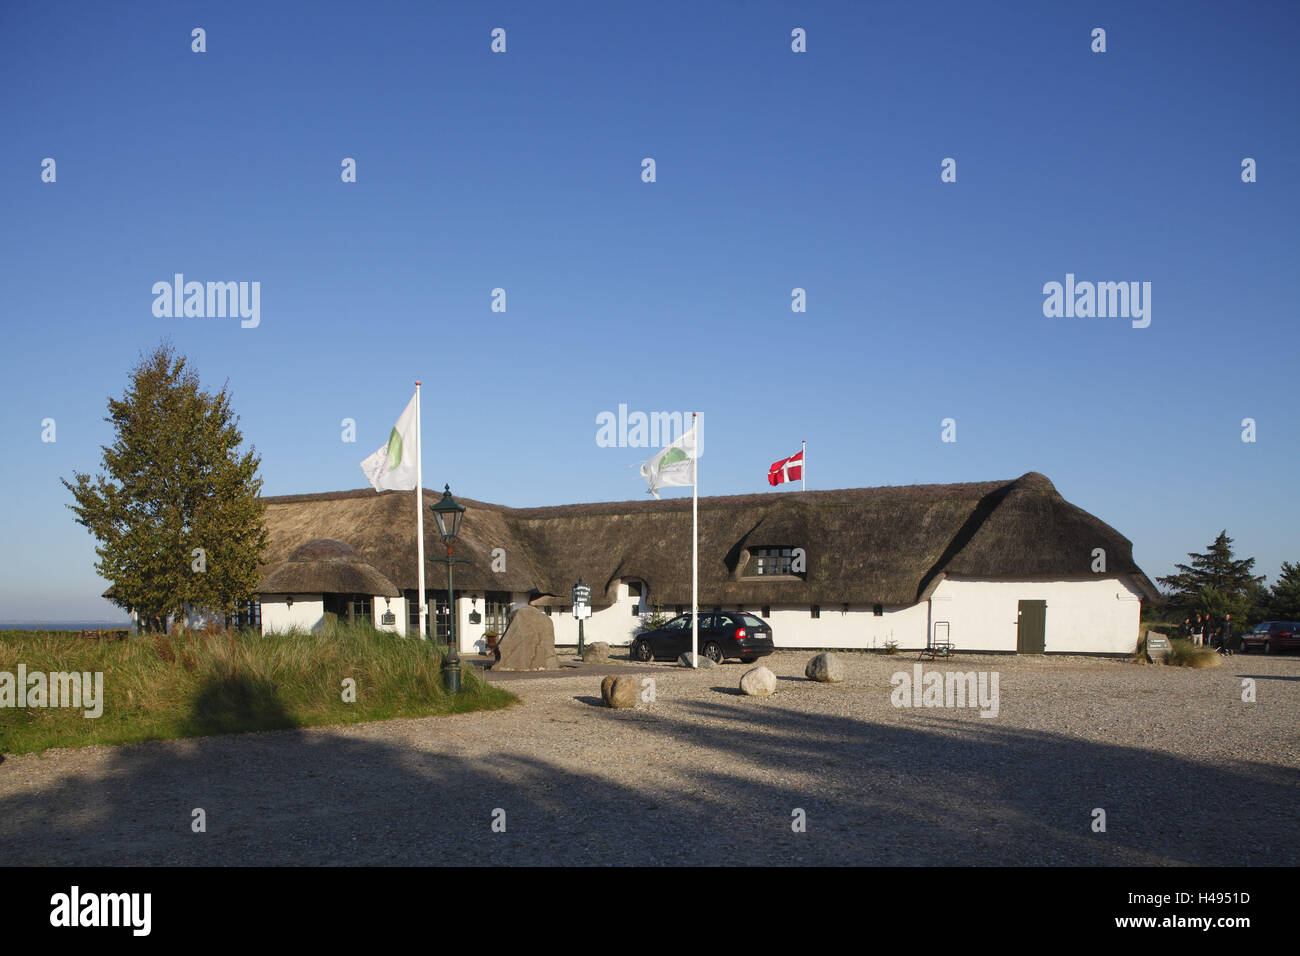 Dänemark, Jütland, Ho, Restaurant der Blavandshuk Golf Club Stockfotografie  - Alamy